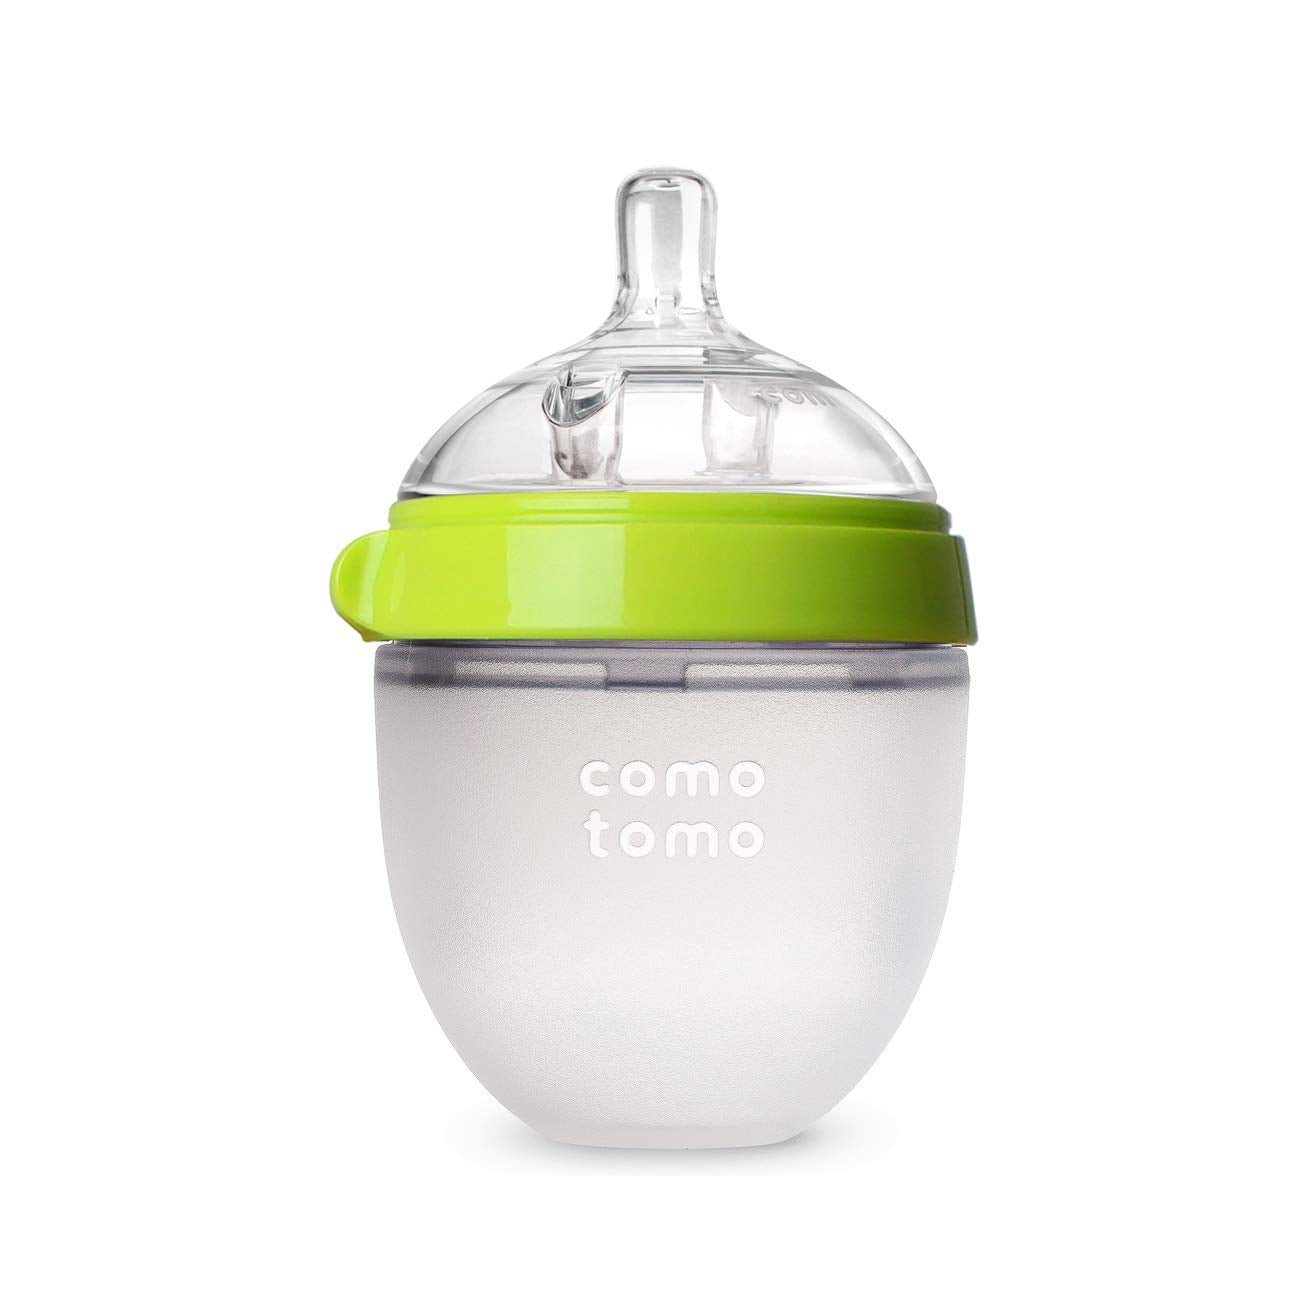 Comotomo Baby Bottle, Green, 8 Oz (Pack of 1)